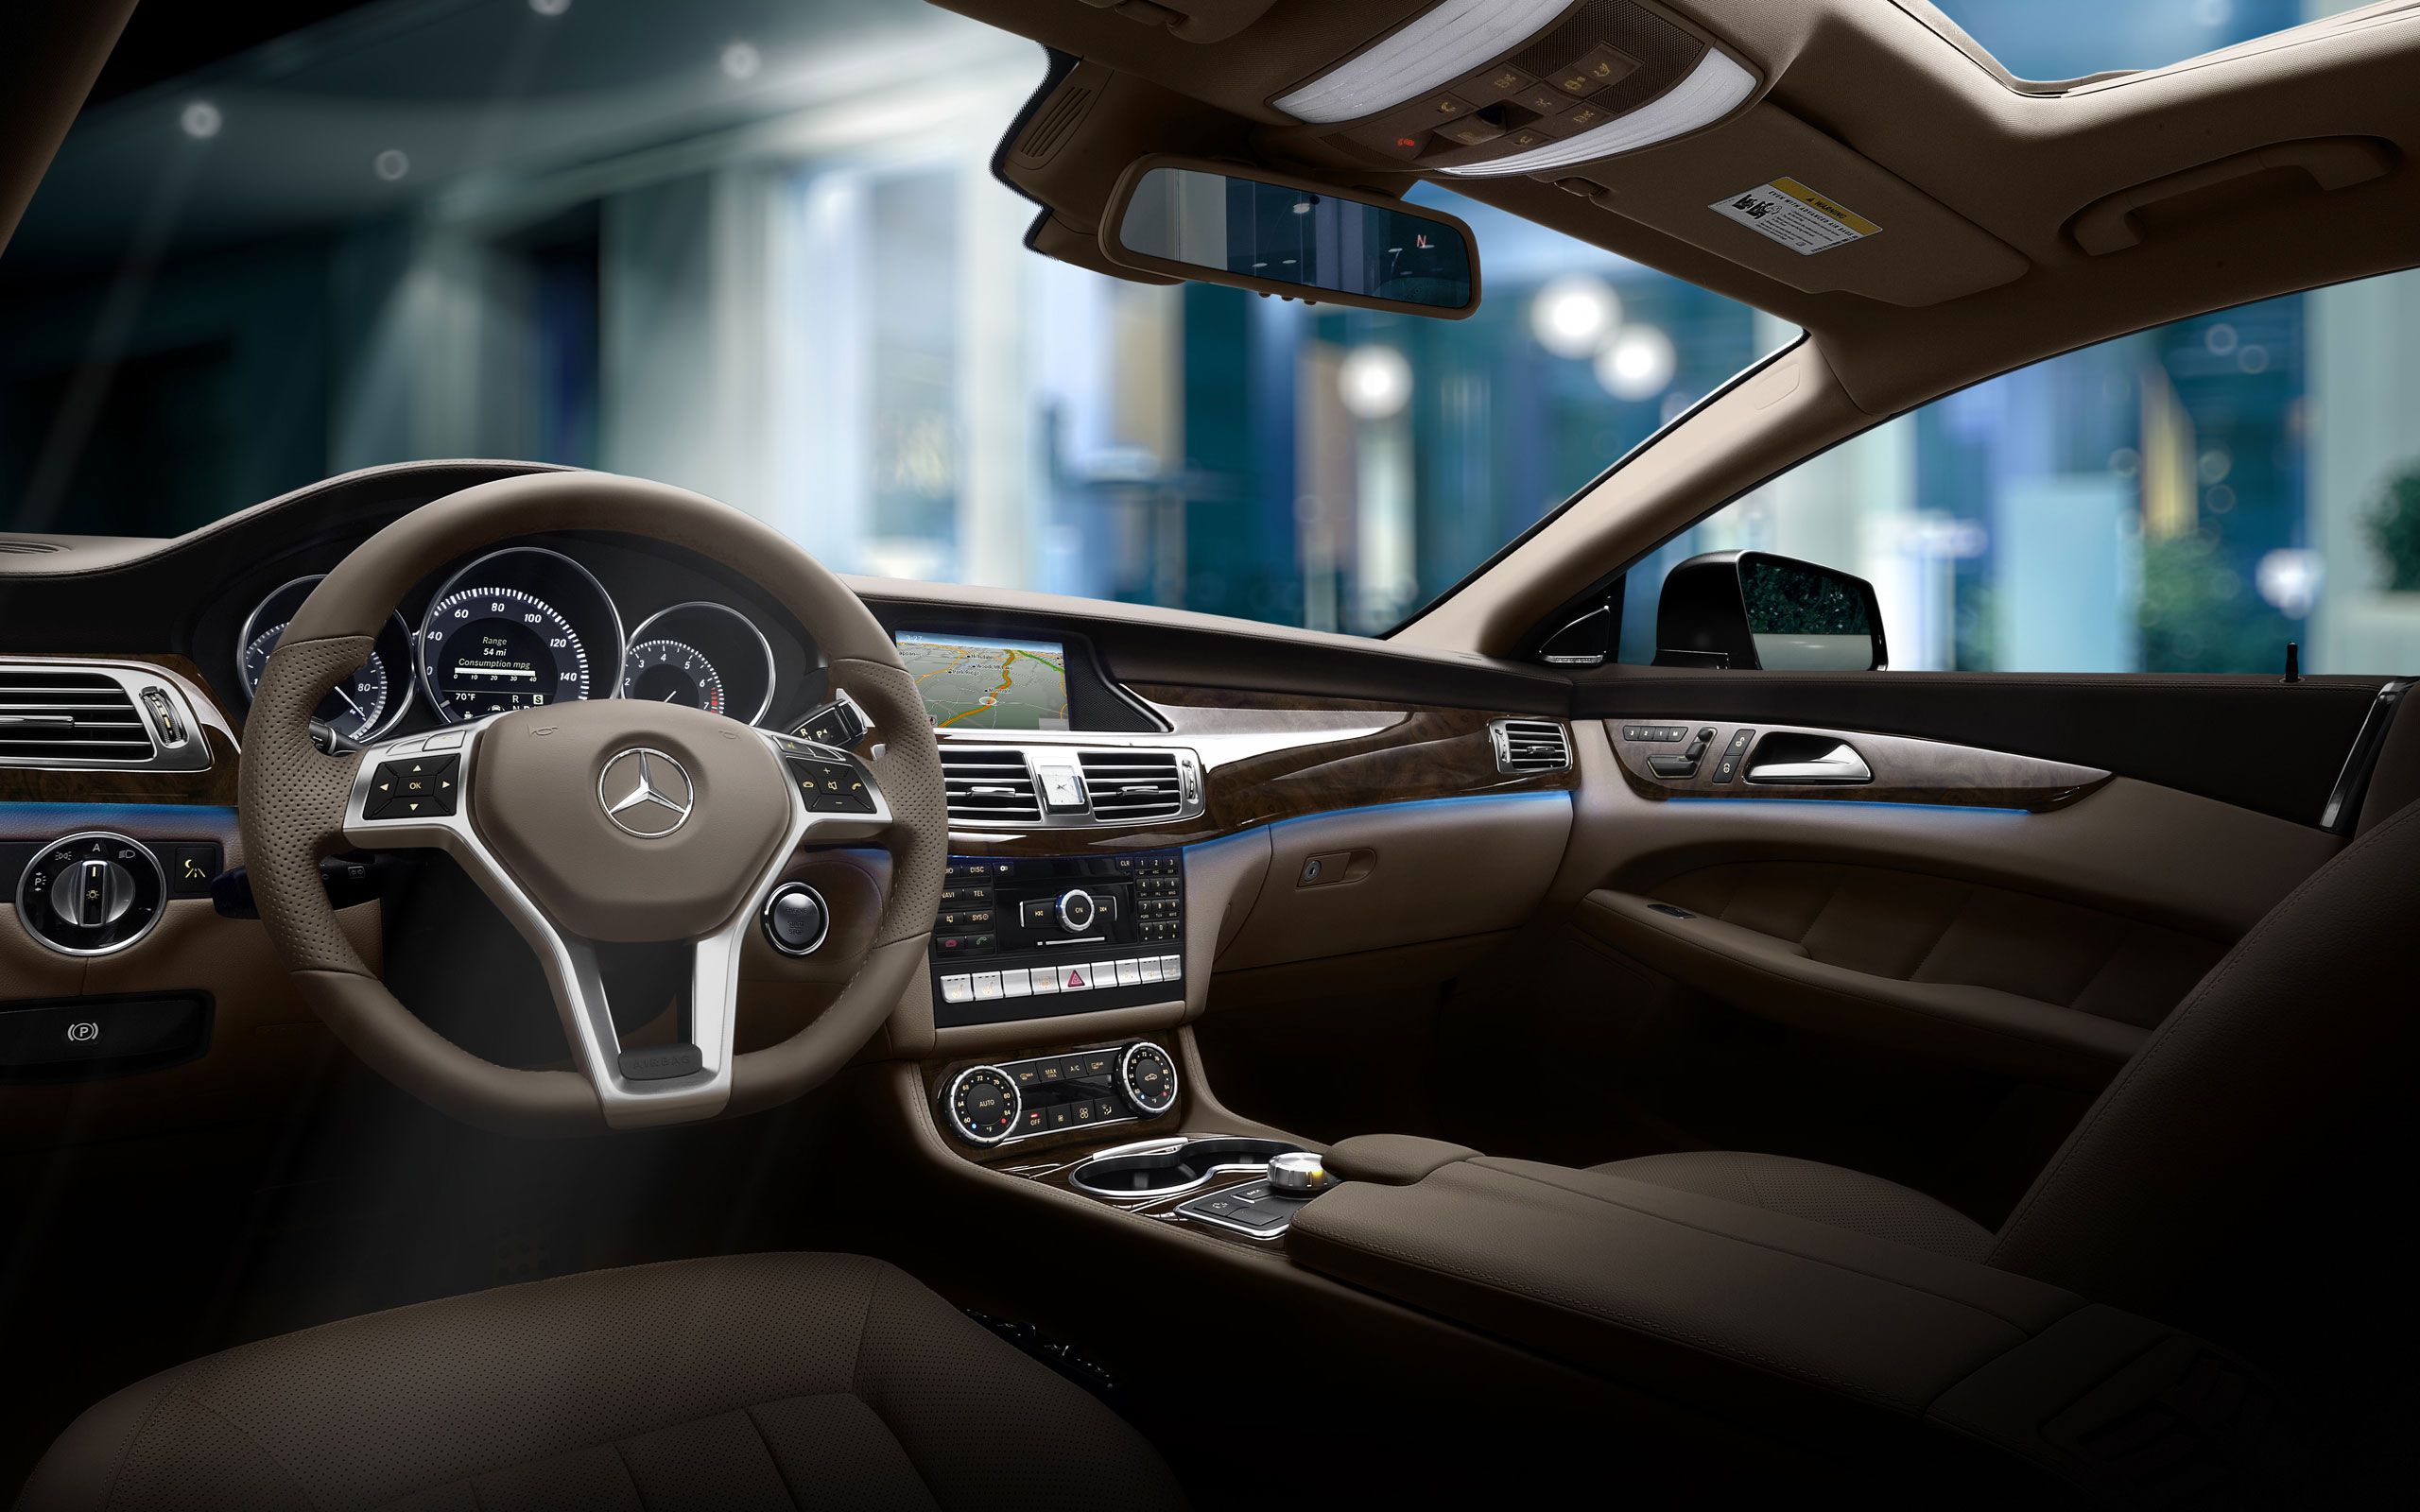 Stunning Mercedes Interior Wallpaper 45816 2560x1600px